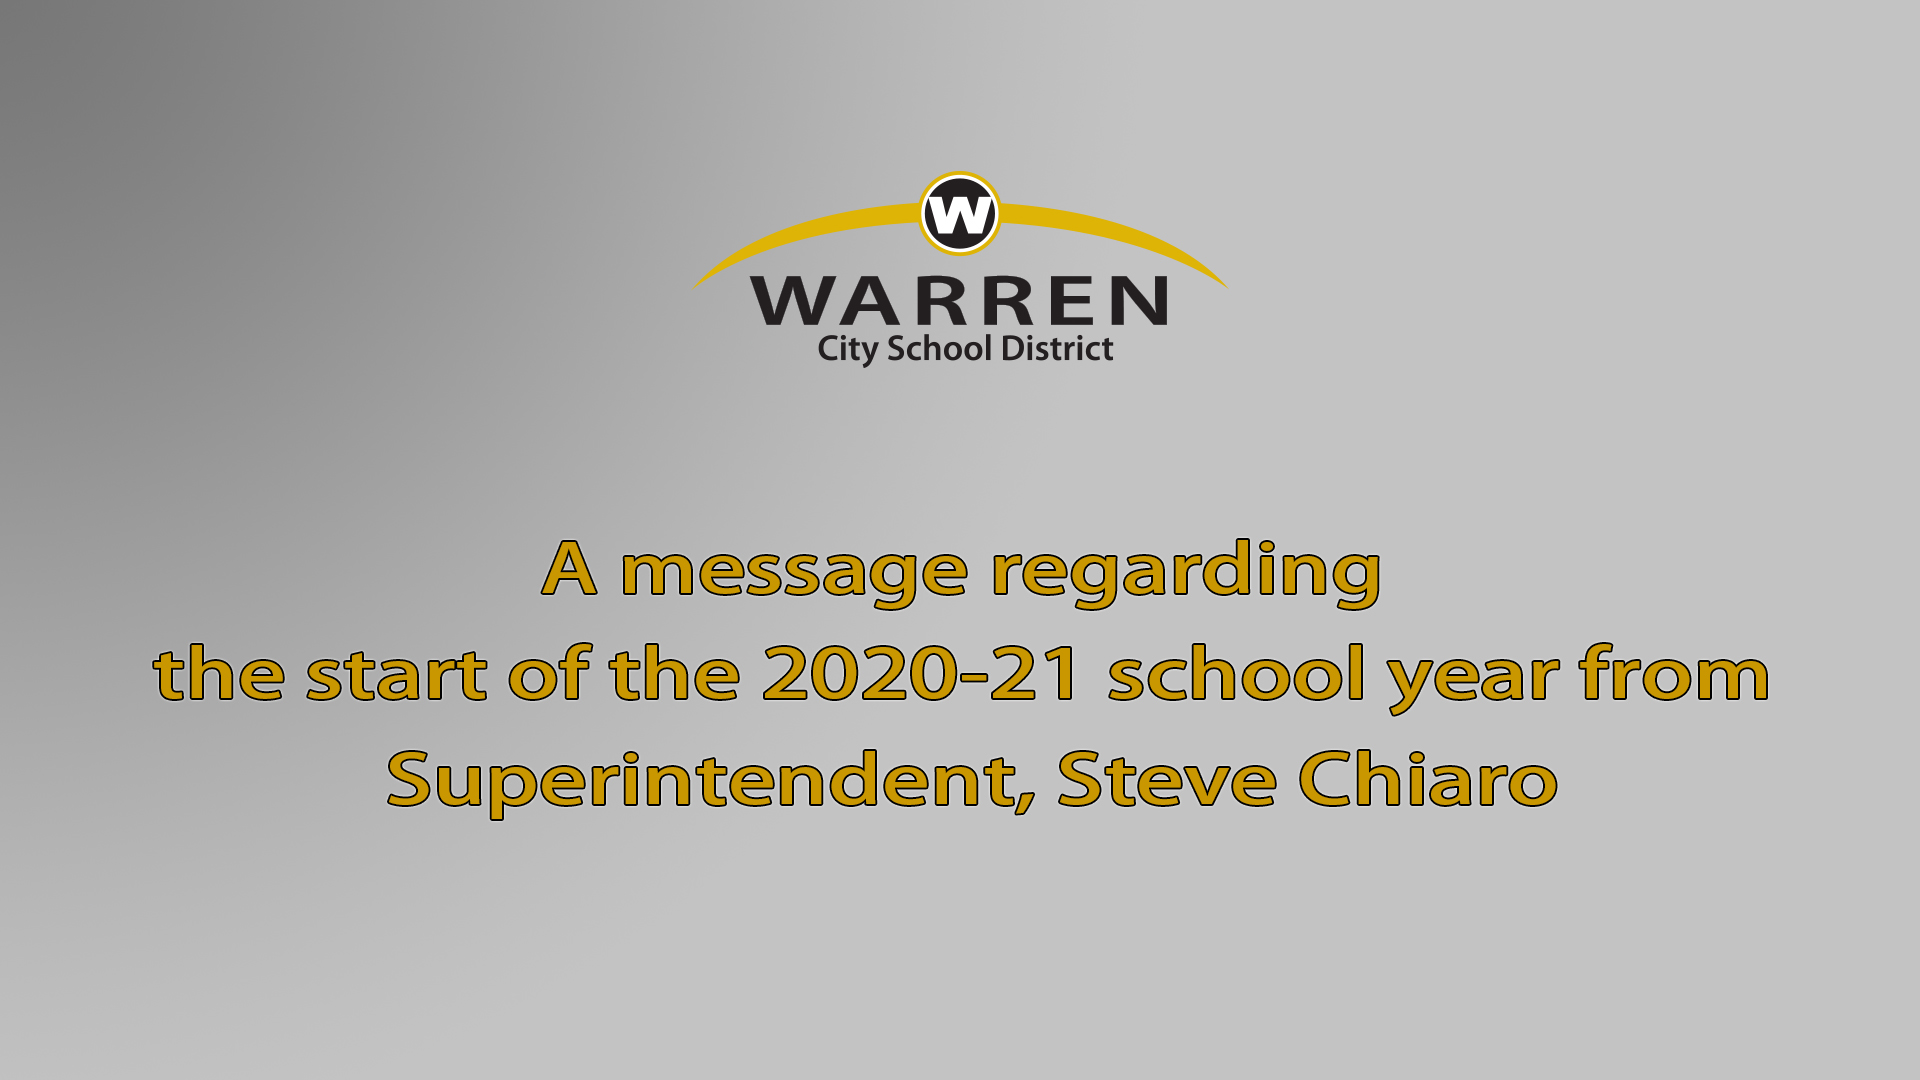 Superintendent’s Message Regarding the 2020-21 School Year